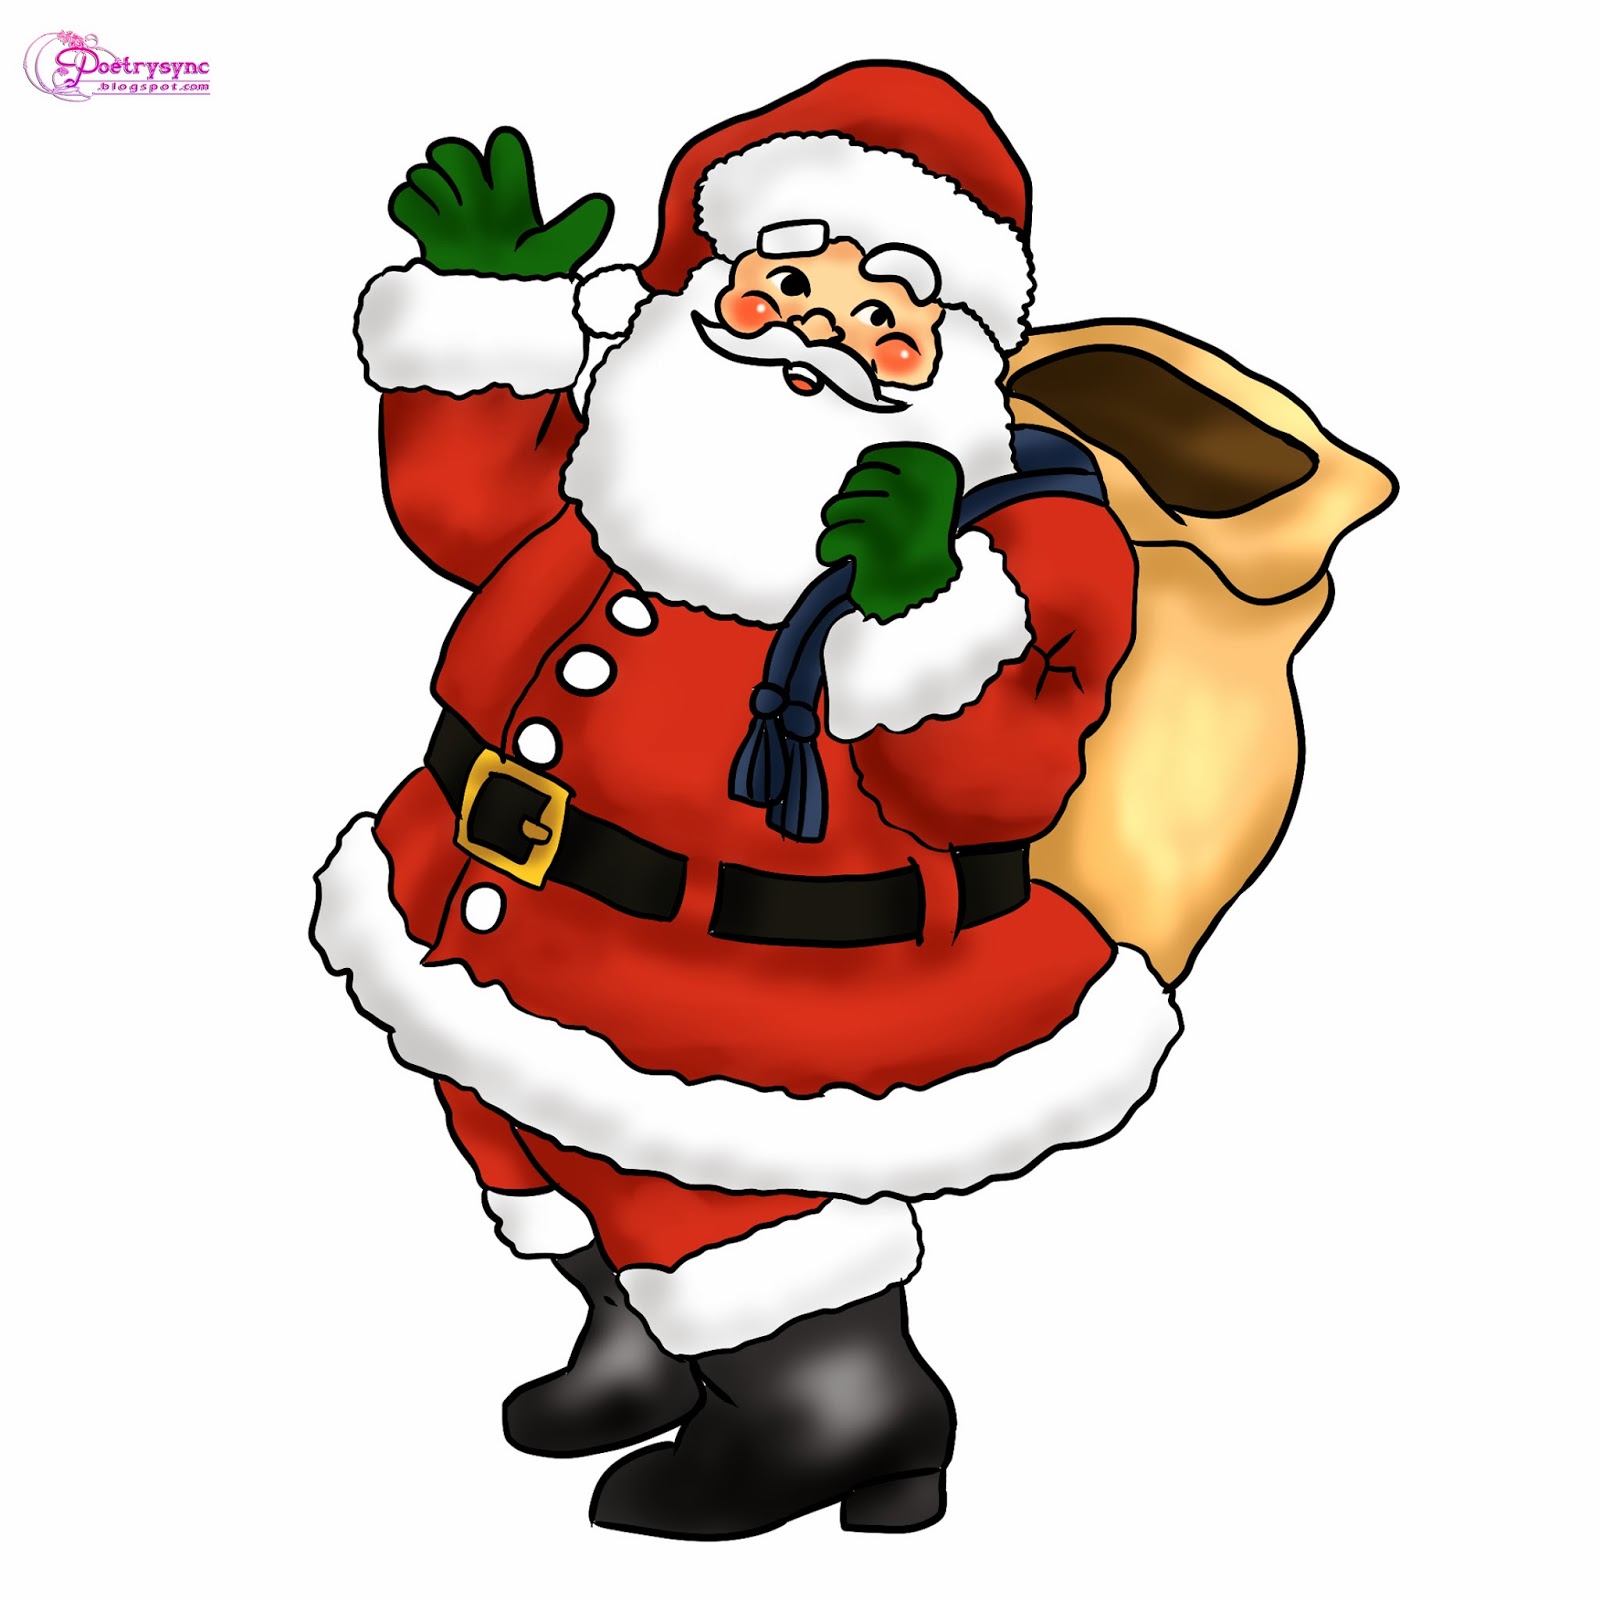 Christmas clipart free clipar - Christmas Clip Art Images